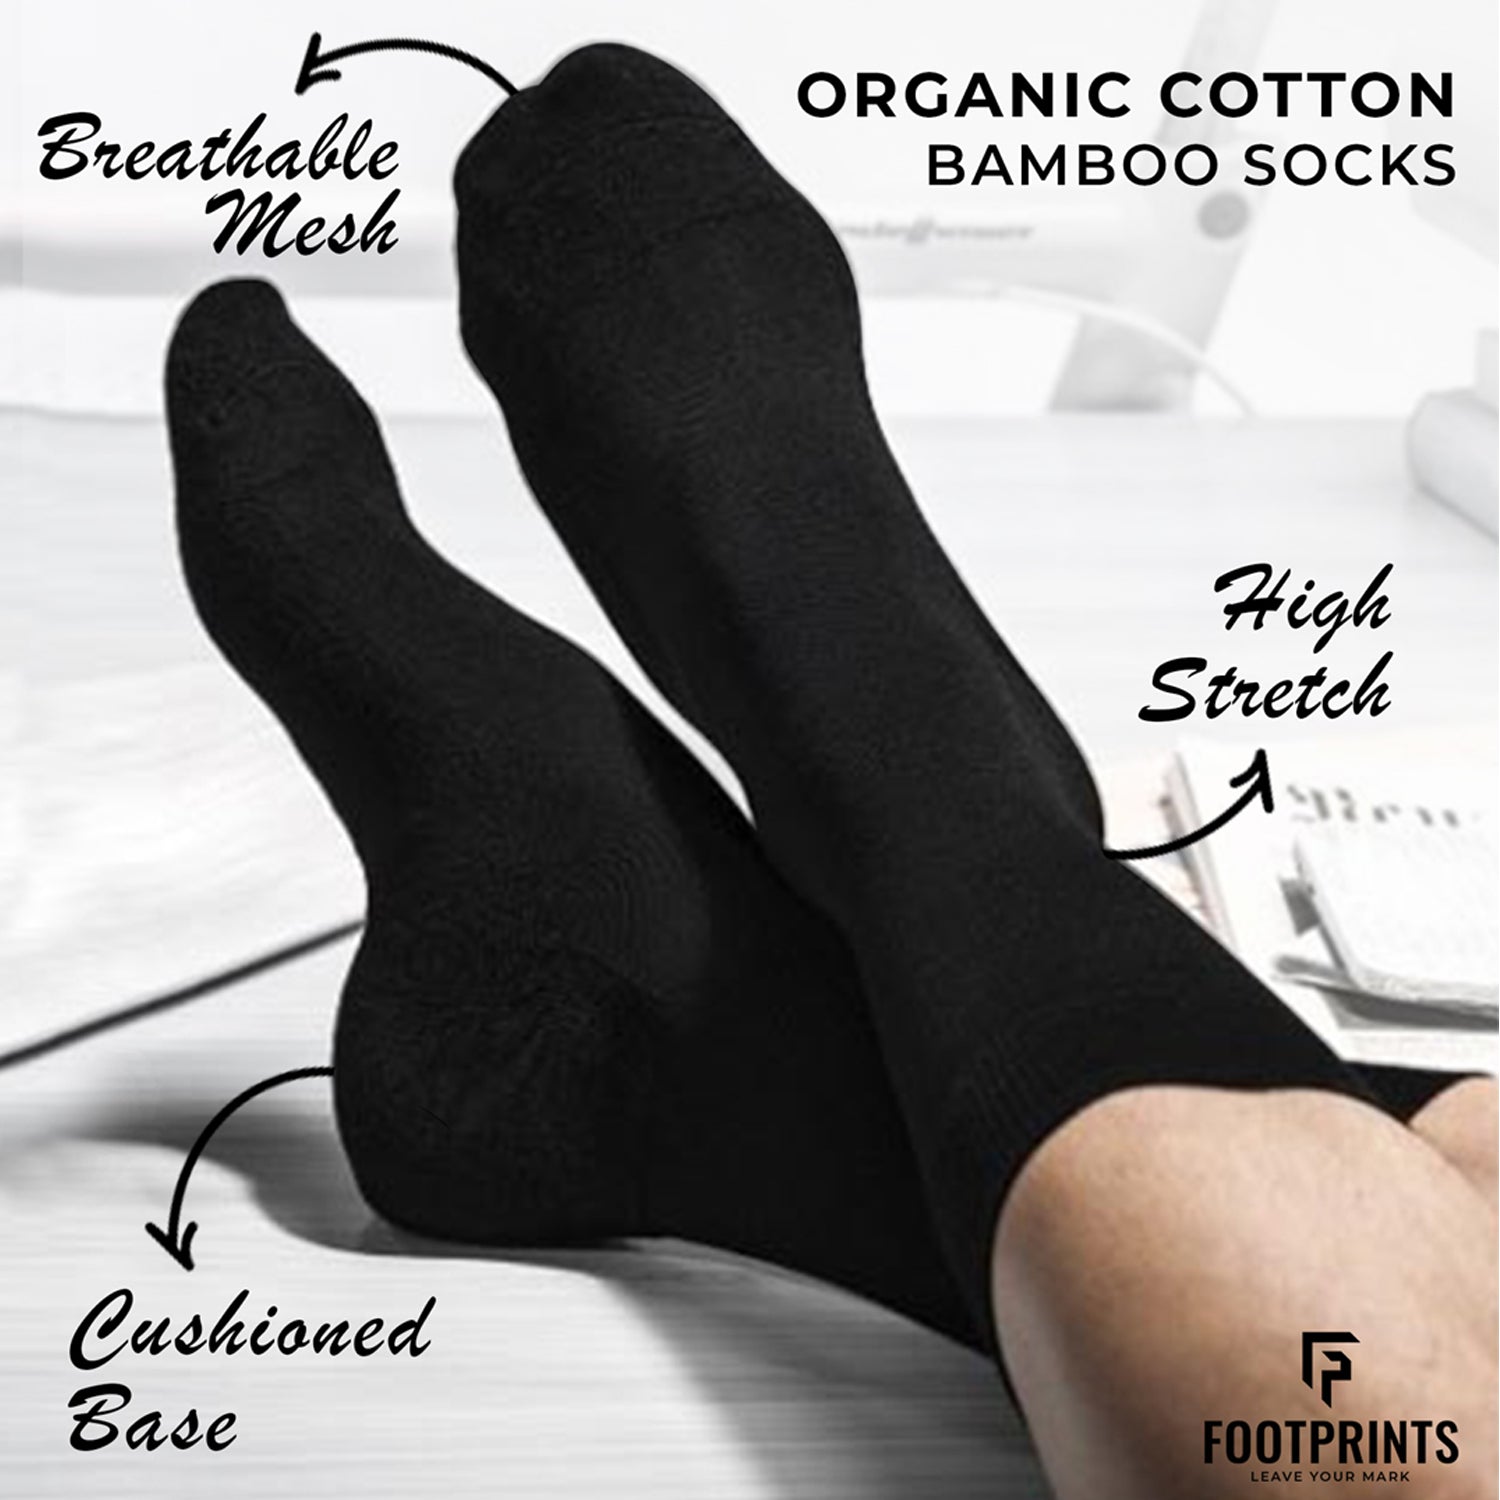 FOOTPRINTS Unisex Solid Cotton Formal & Ankle-Length Socks -Pack Of 3